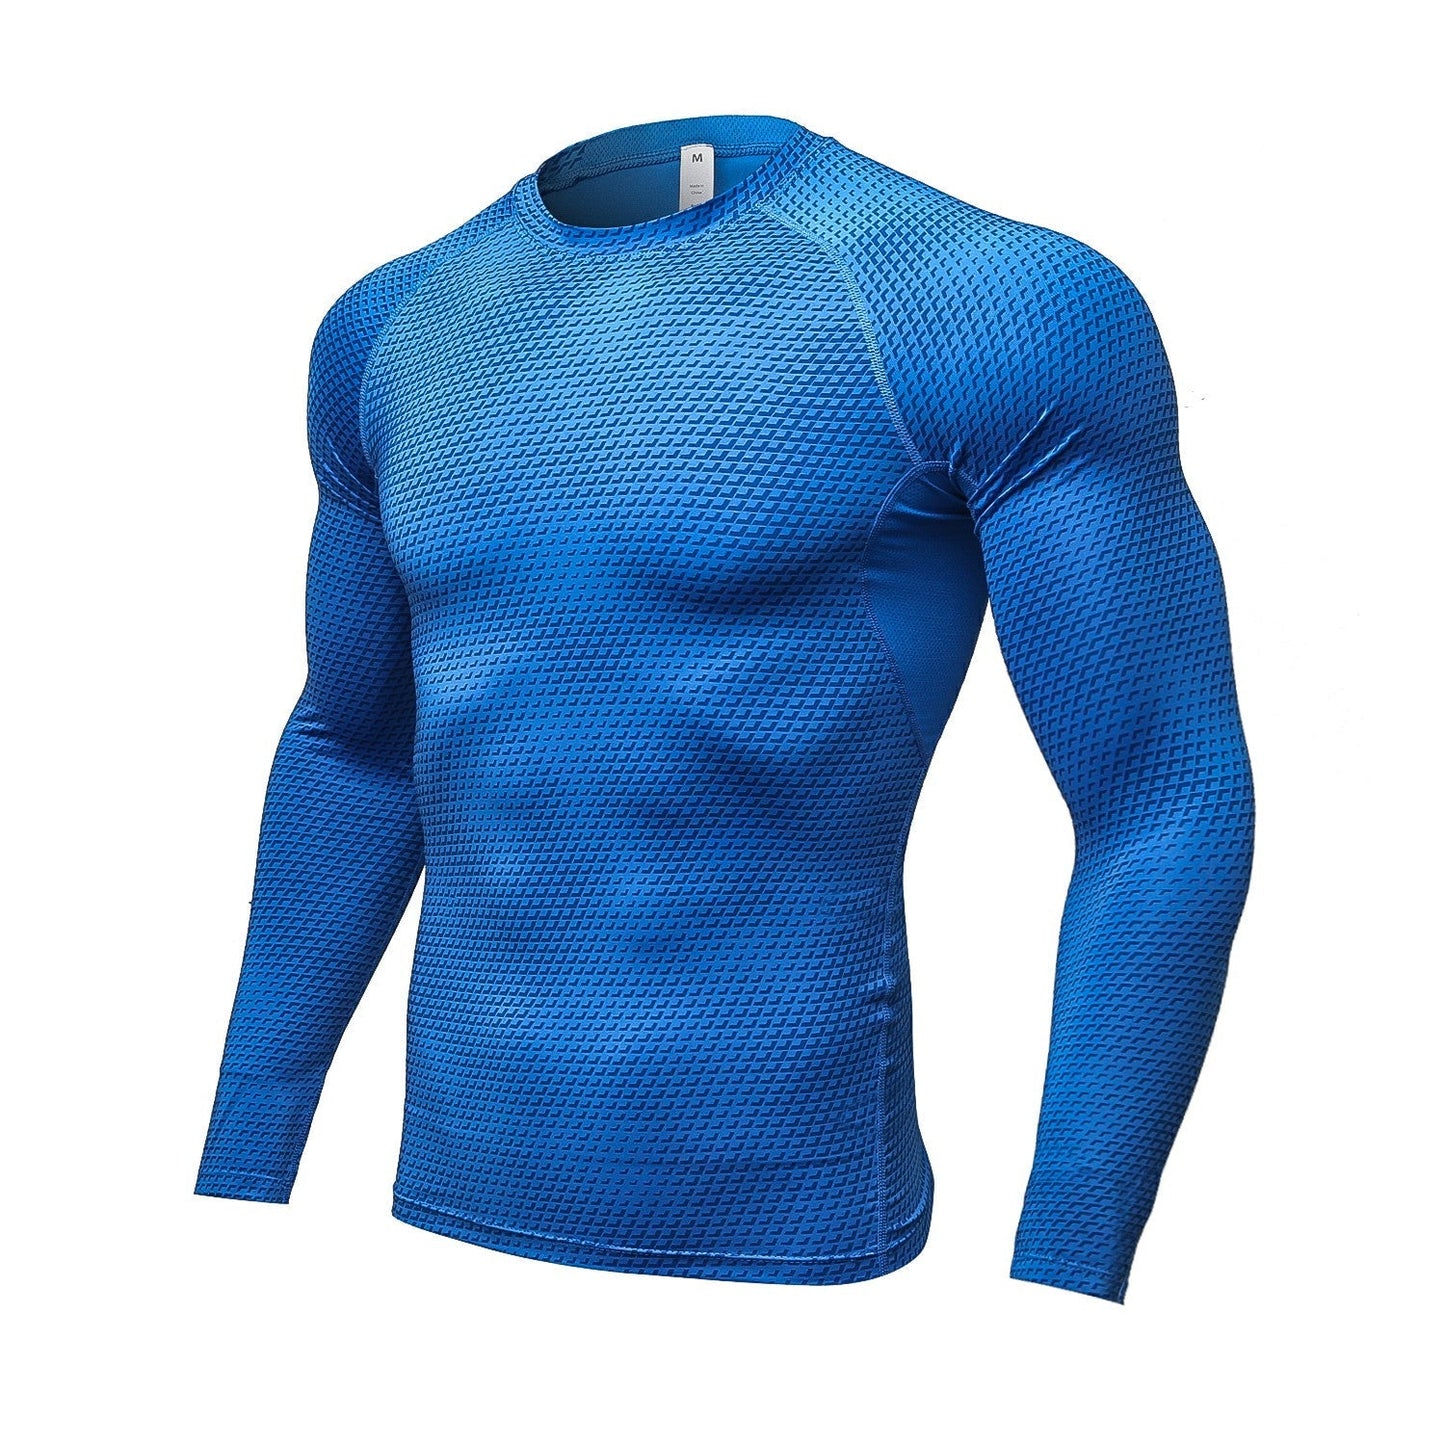 LANBAOSI Mens Long Sleeve Cyclist Jersey 3D Snake Skin Printed T-Shirt Running Tops LANBAOSI